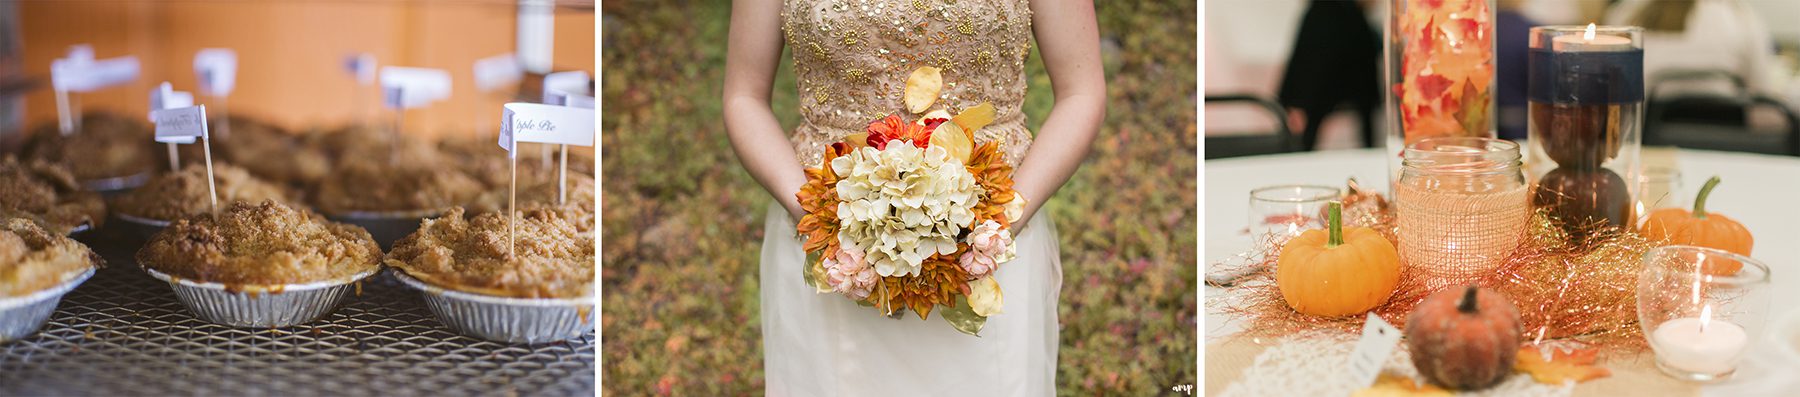 Top Details for Fall Weddings | amanda.matilda.photography